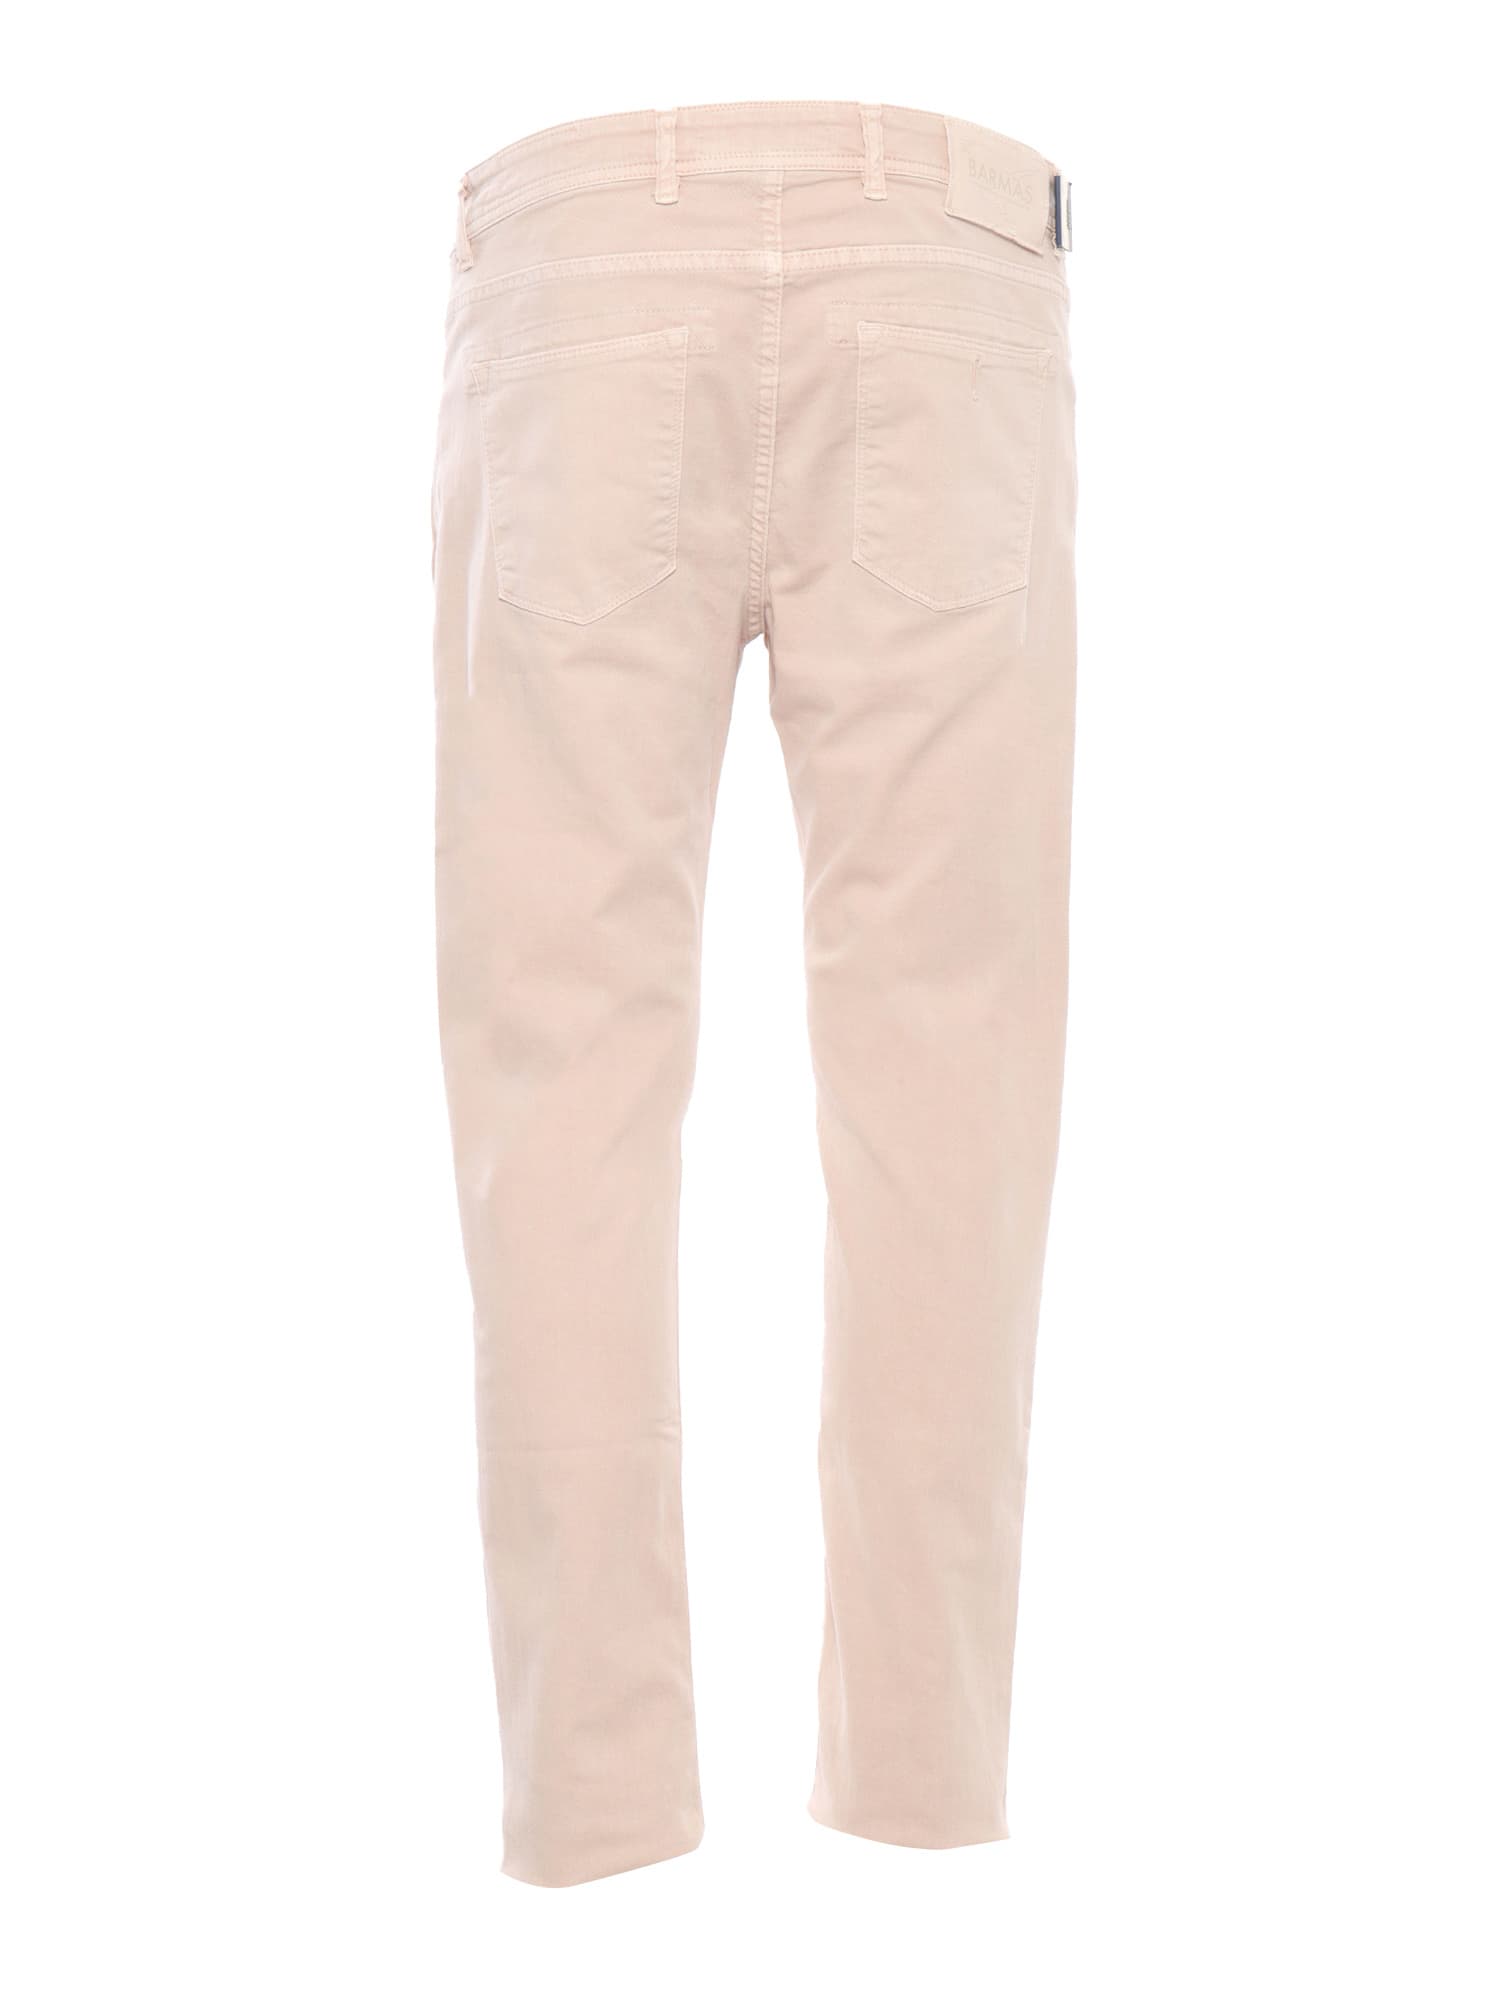 Shop Barmas Pink Undertone Denim Trousers